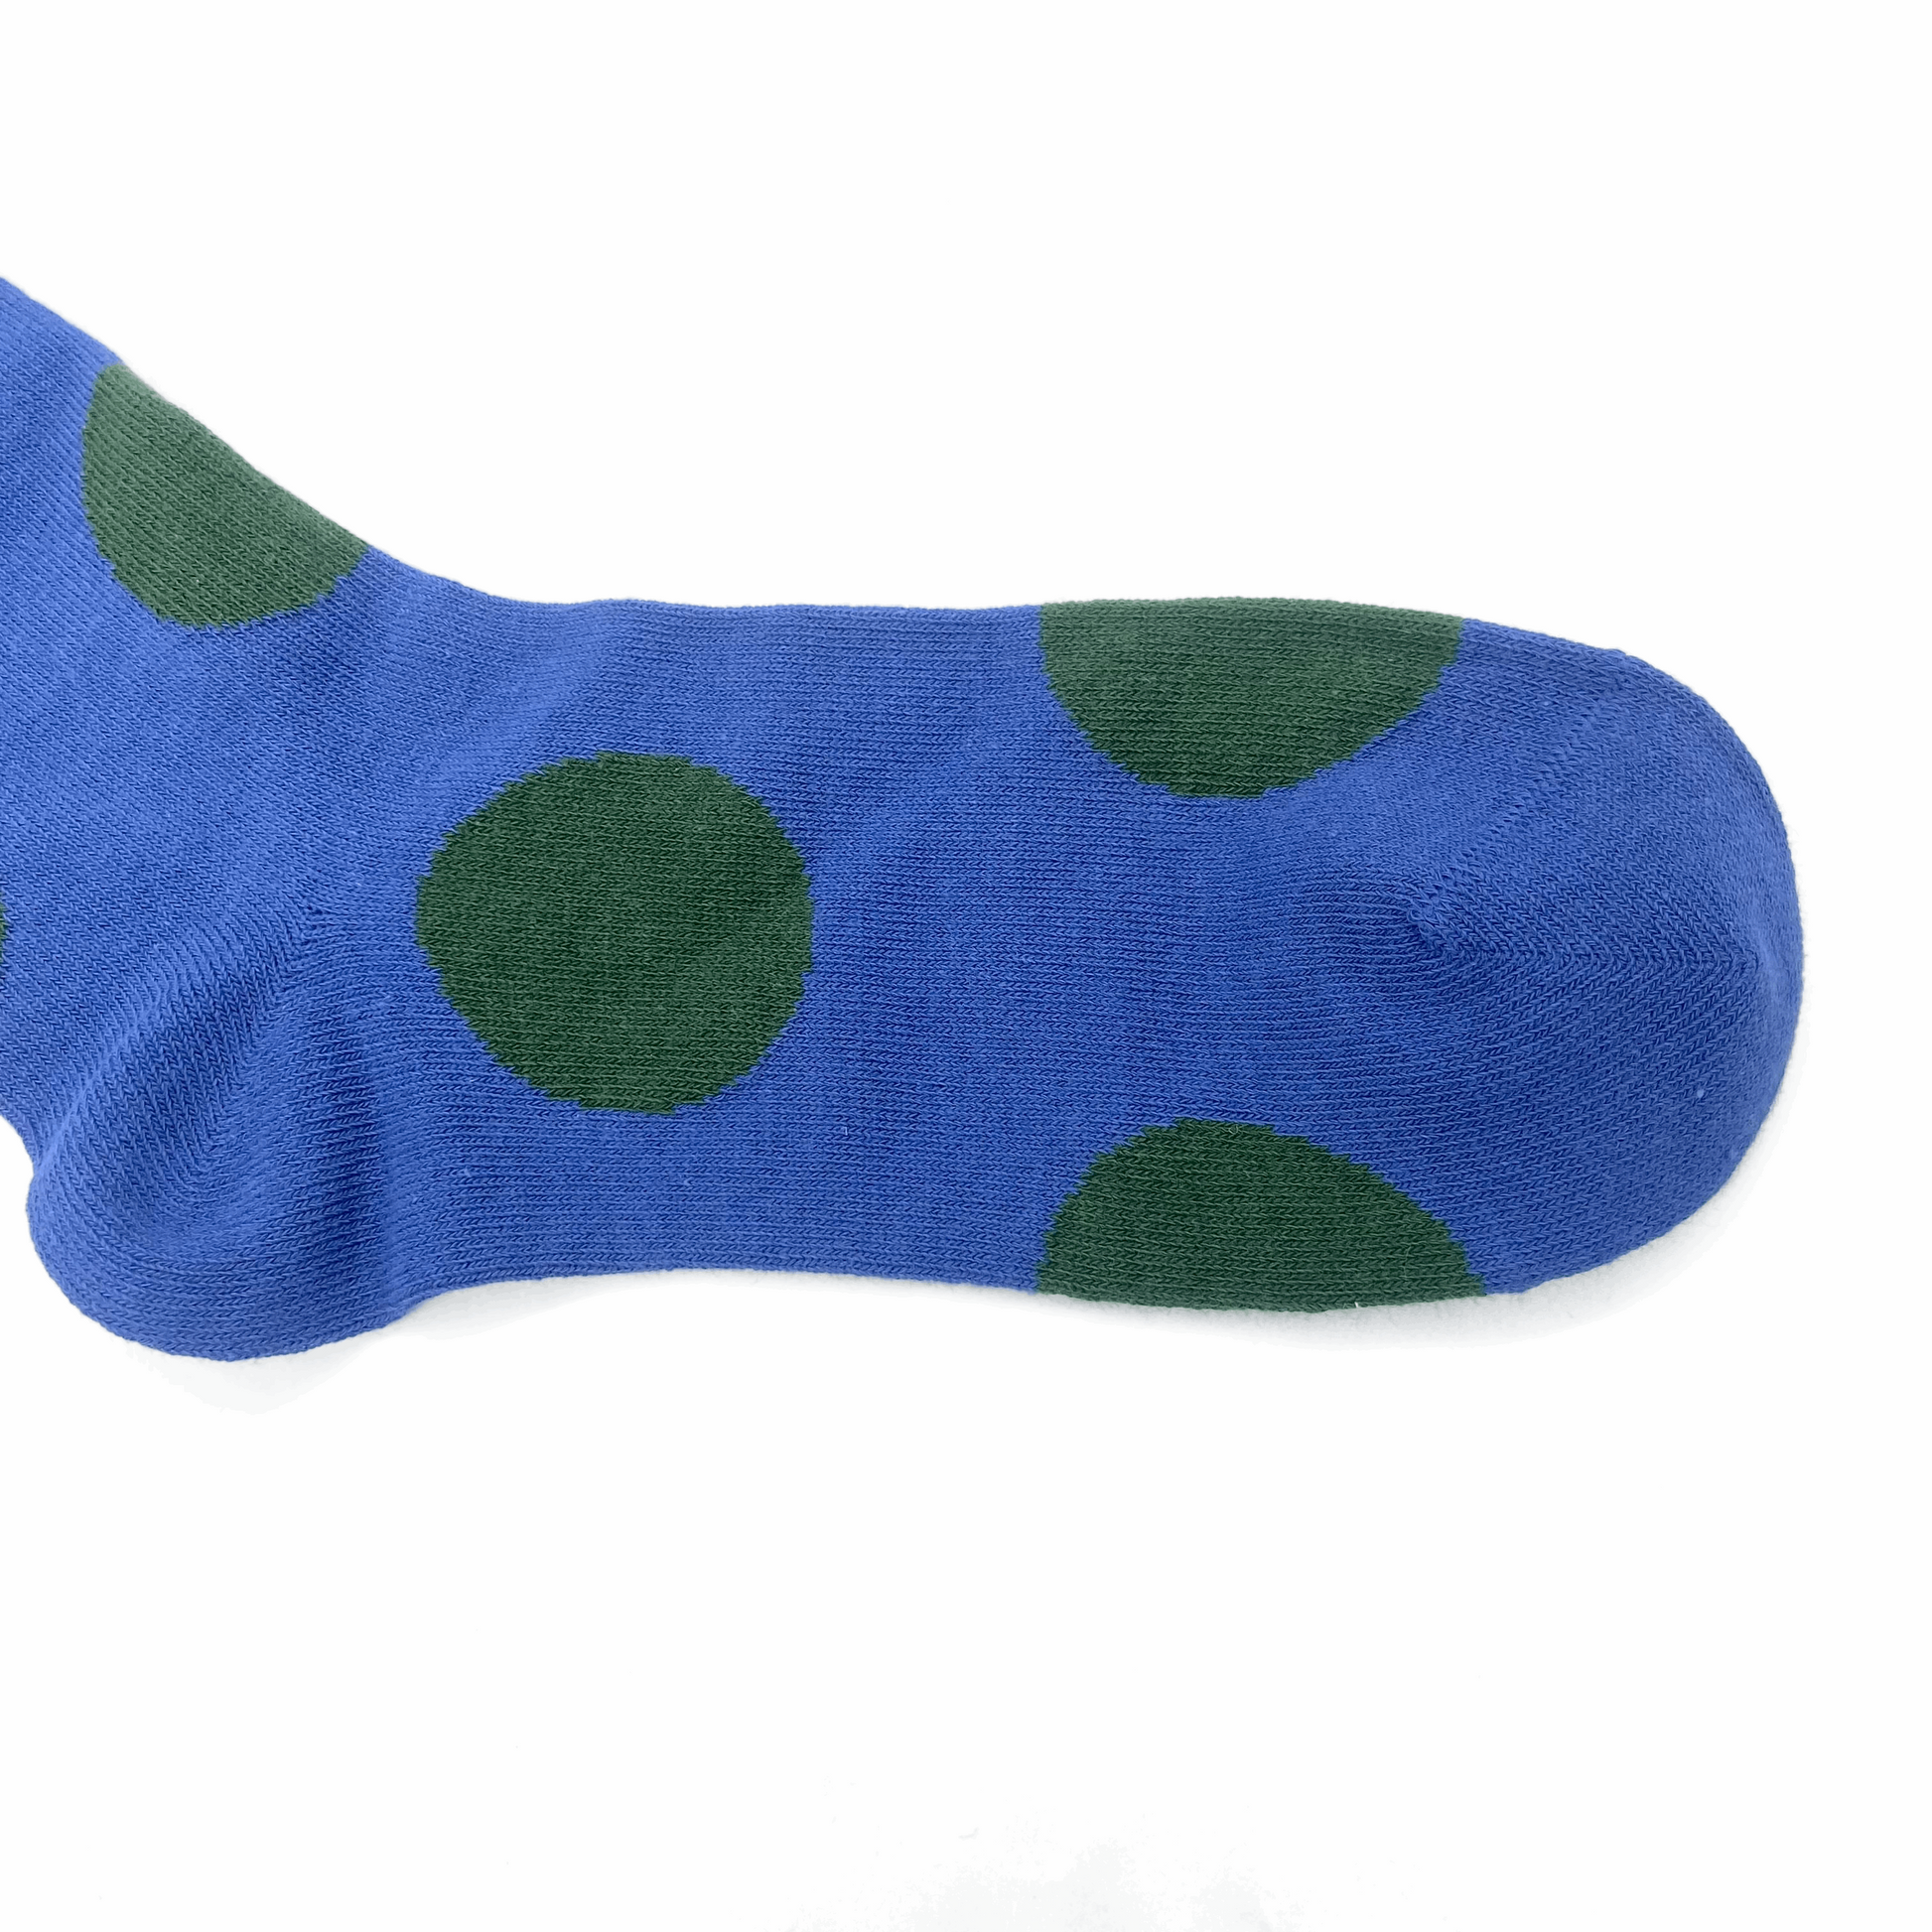 blue socks with green polka dots